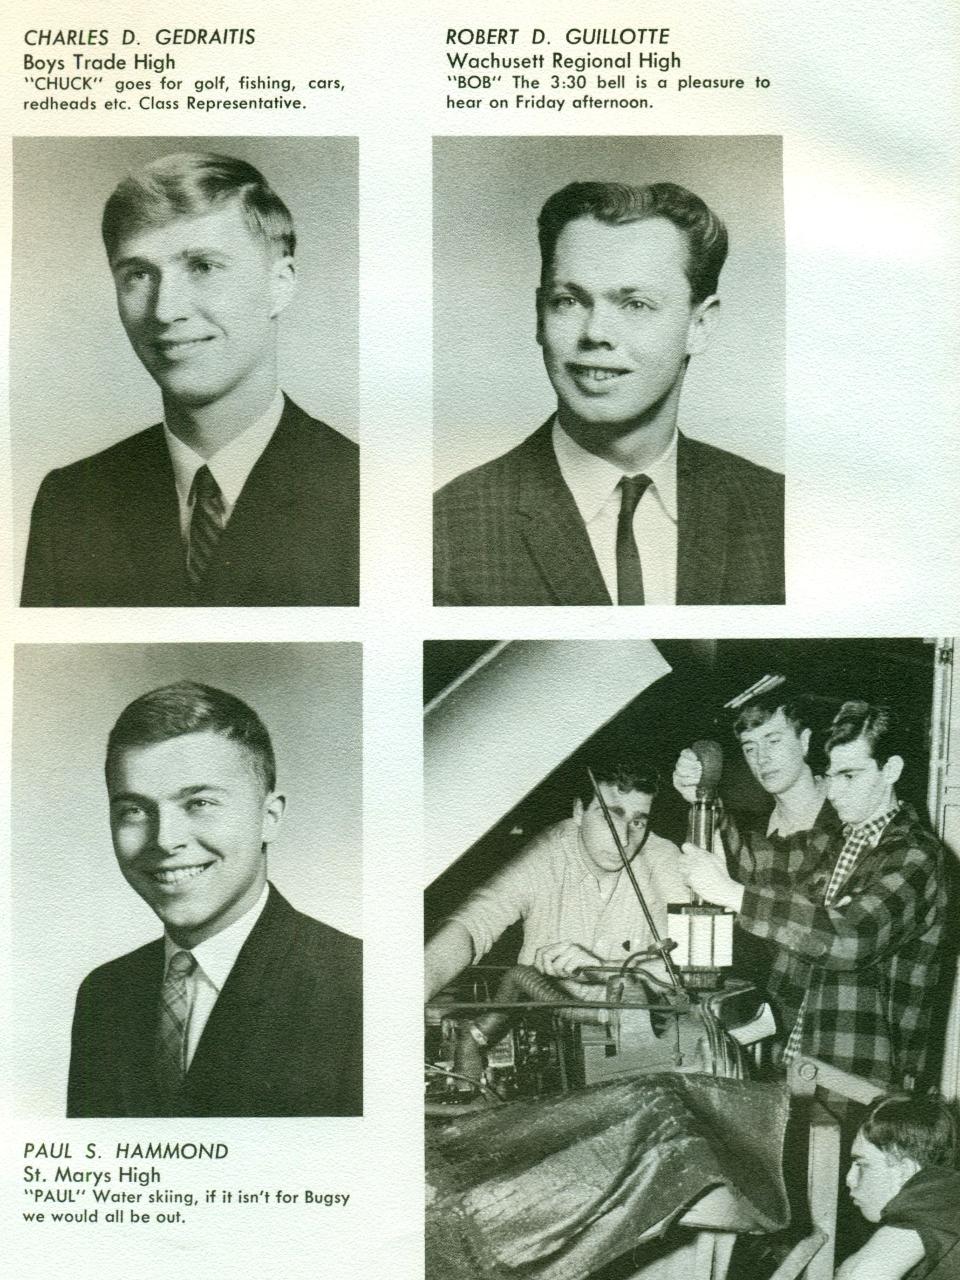 Worcester Industrial Technical Institute Class of 1967 Yearbook Auto Mechanics